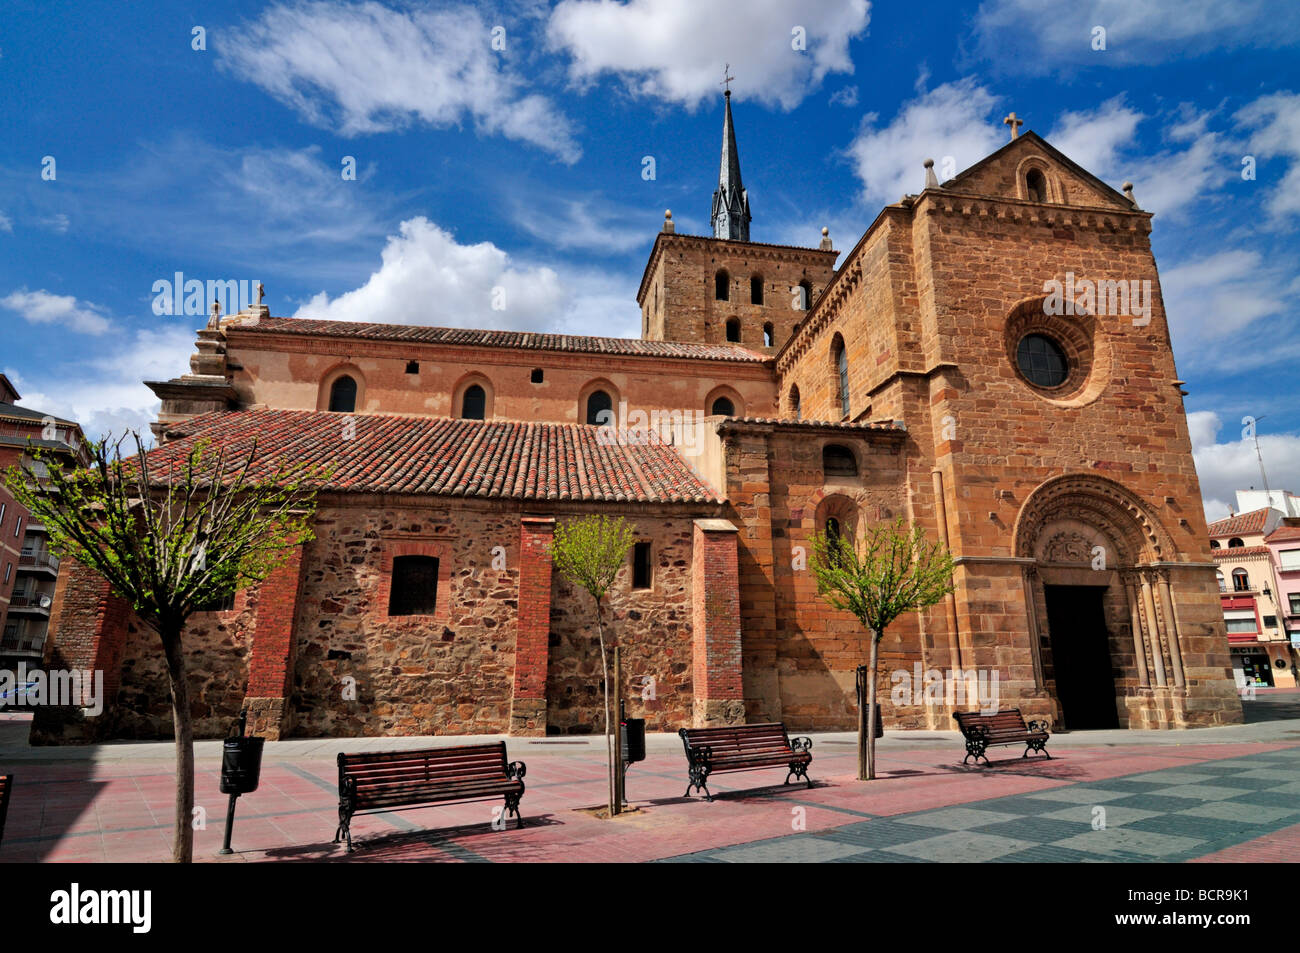 Spain, Via de la Plata: Romanesque church Santa Maria del Azogue in Benavente Stock Photo